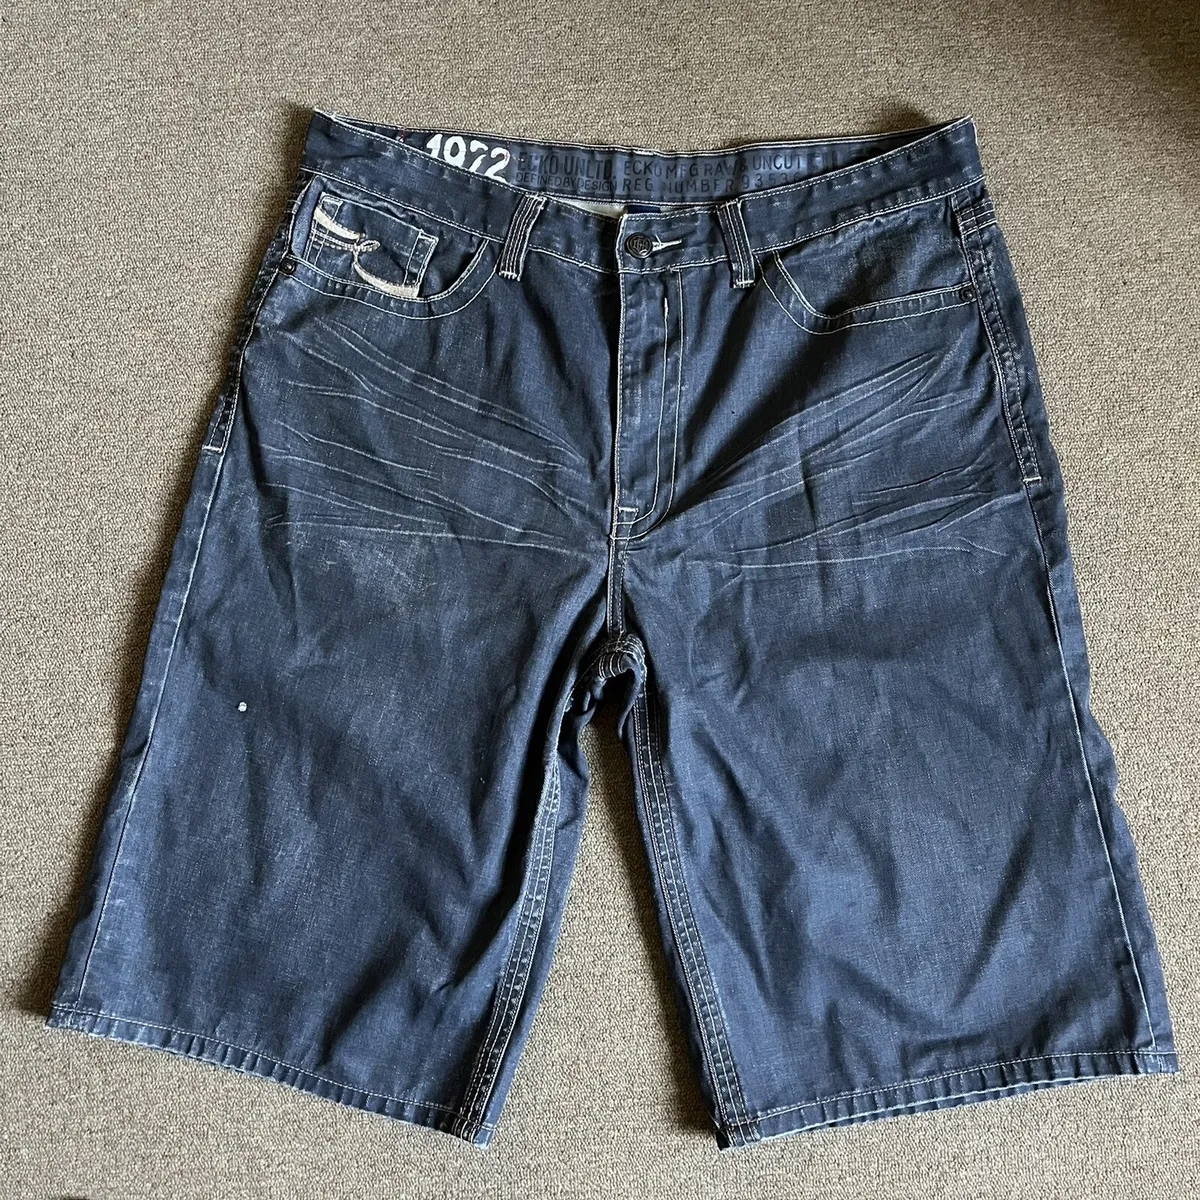 Vintage Ecko Unltd Embroidered Baggy Fit Waxed Denim Jean Shorts Jorts Size  38